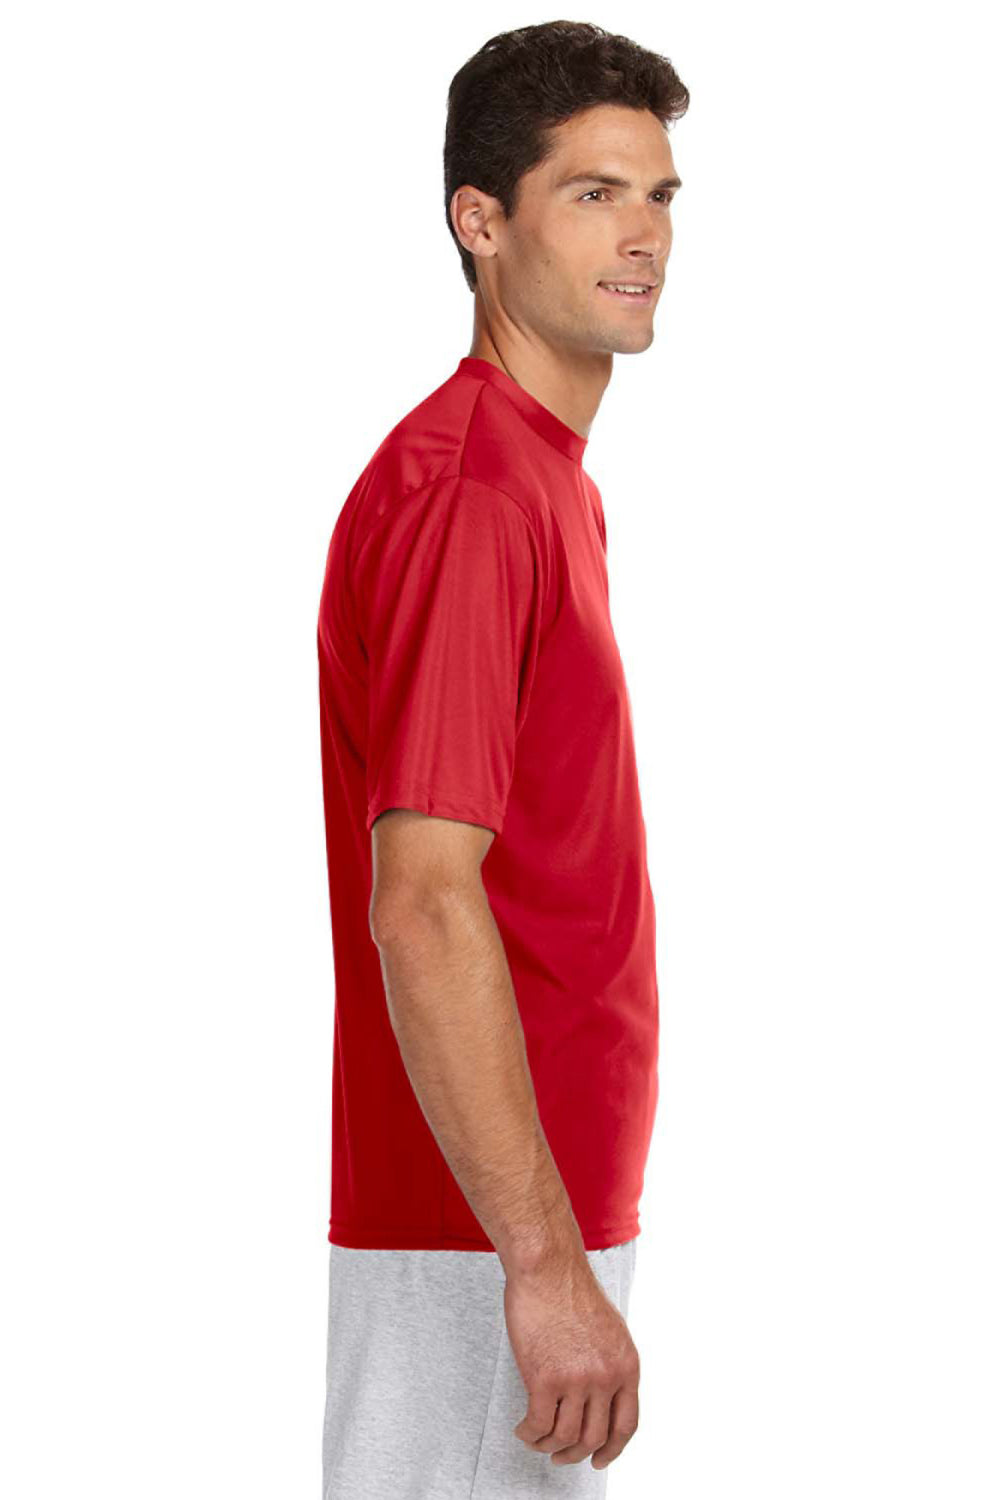 A4 N3142 Mens Performance Moisture Wicking Short Sleeve Crewneck T-Shirt Scarlet Red Model Side